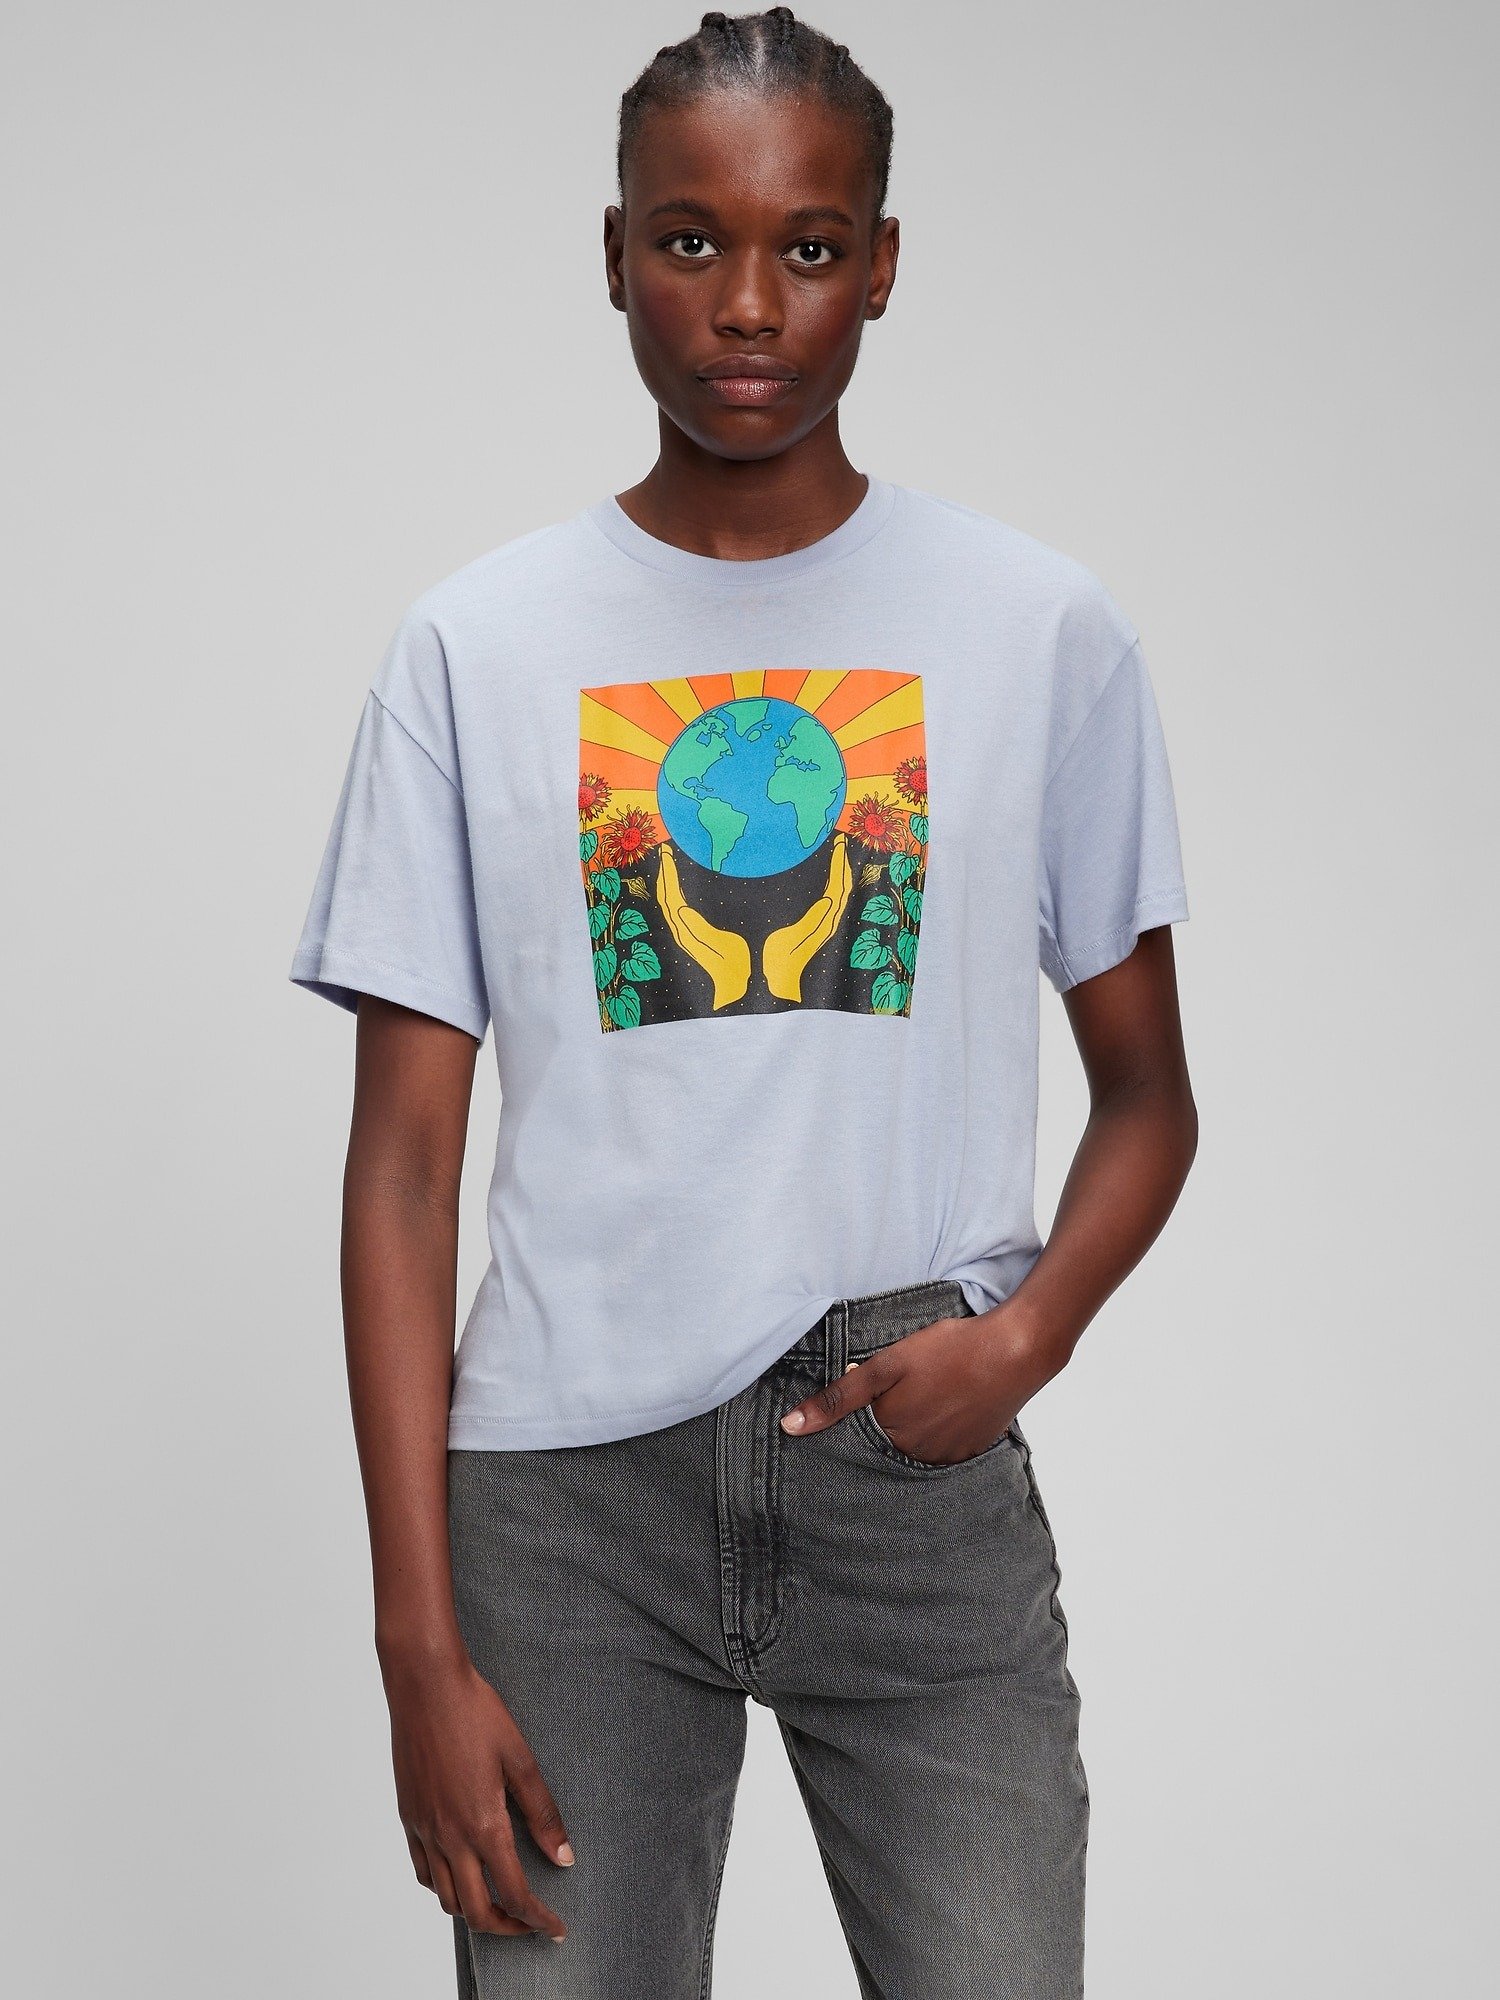 Gap x Yen Ospina 100% Organik Pamuk T-Shirt product image